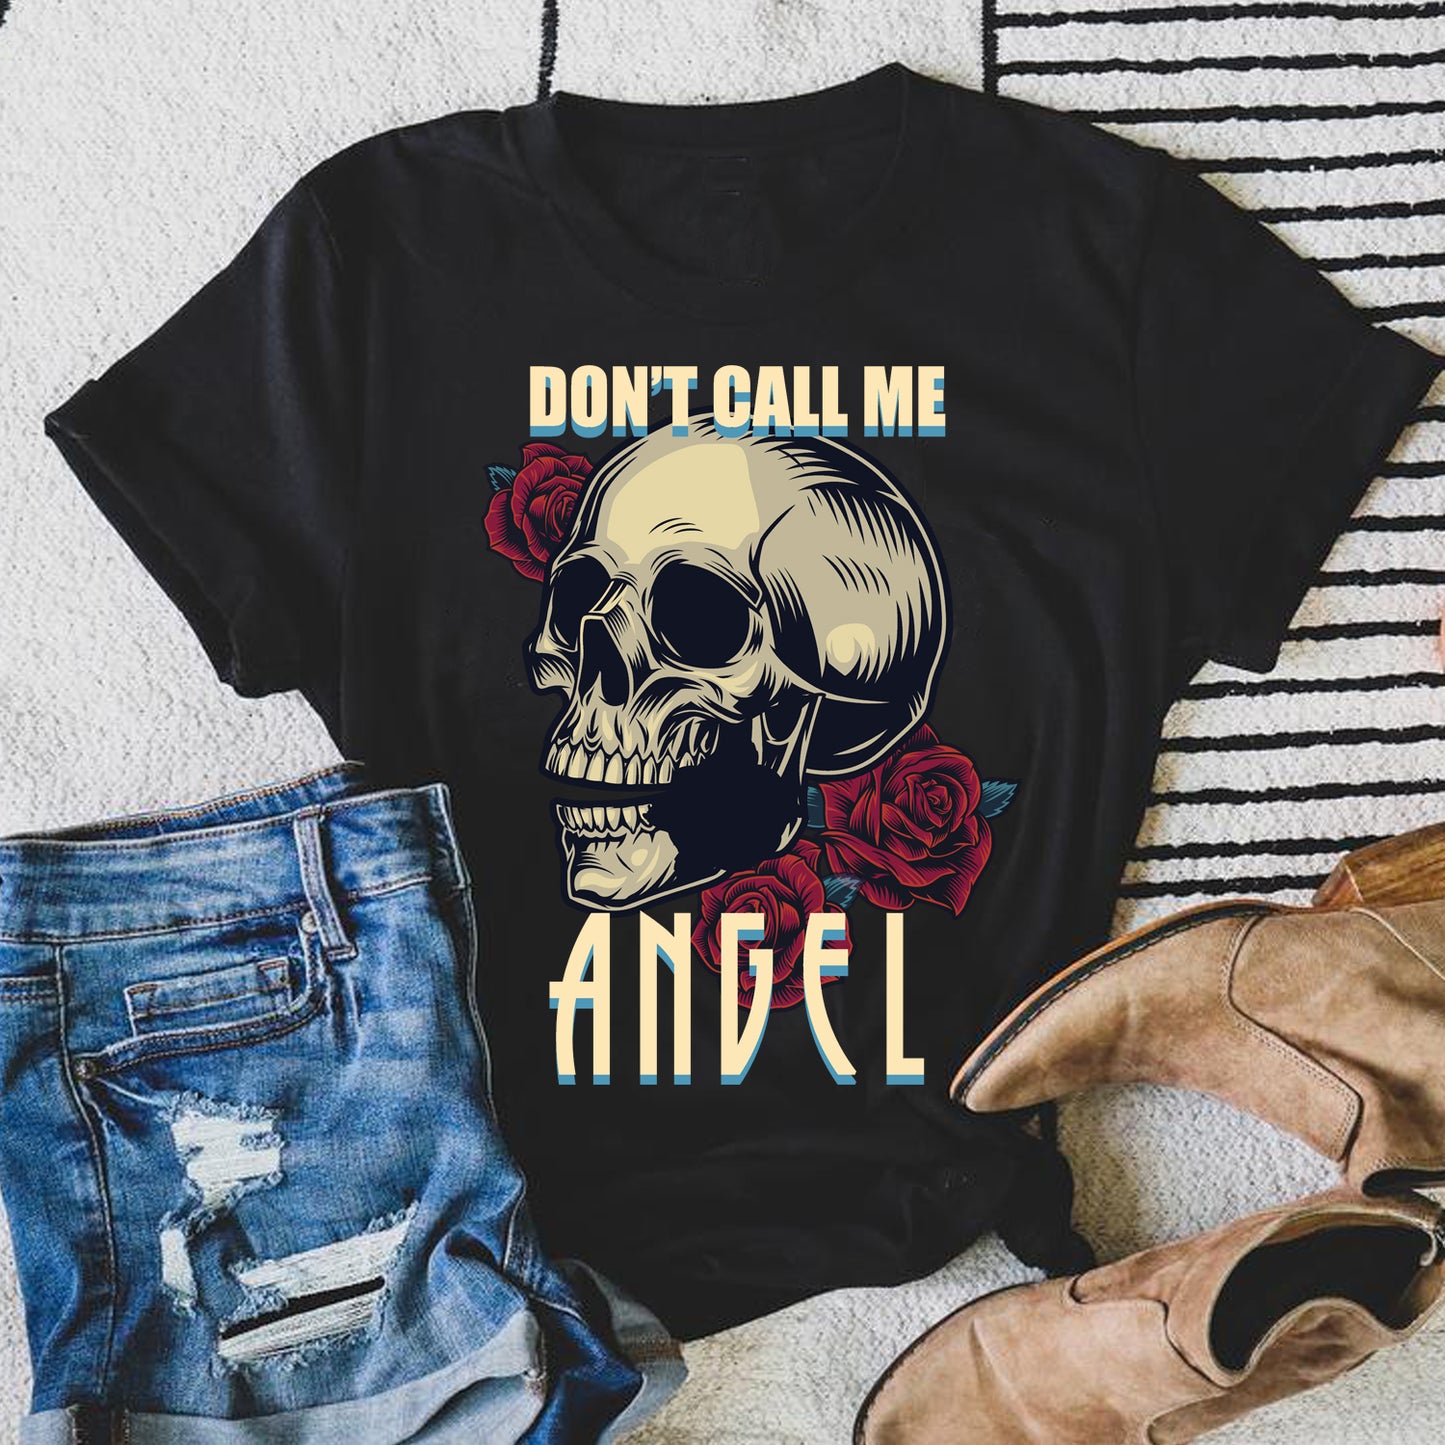 Don't Call Me Angel - T-Shirt